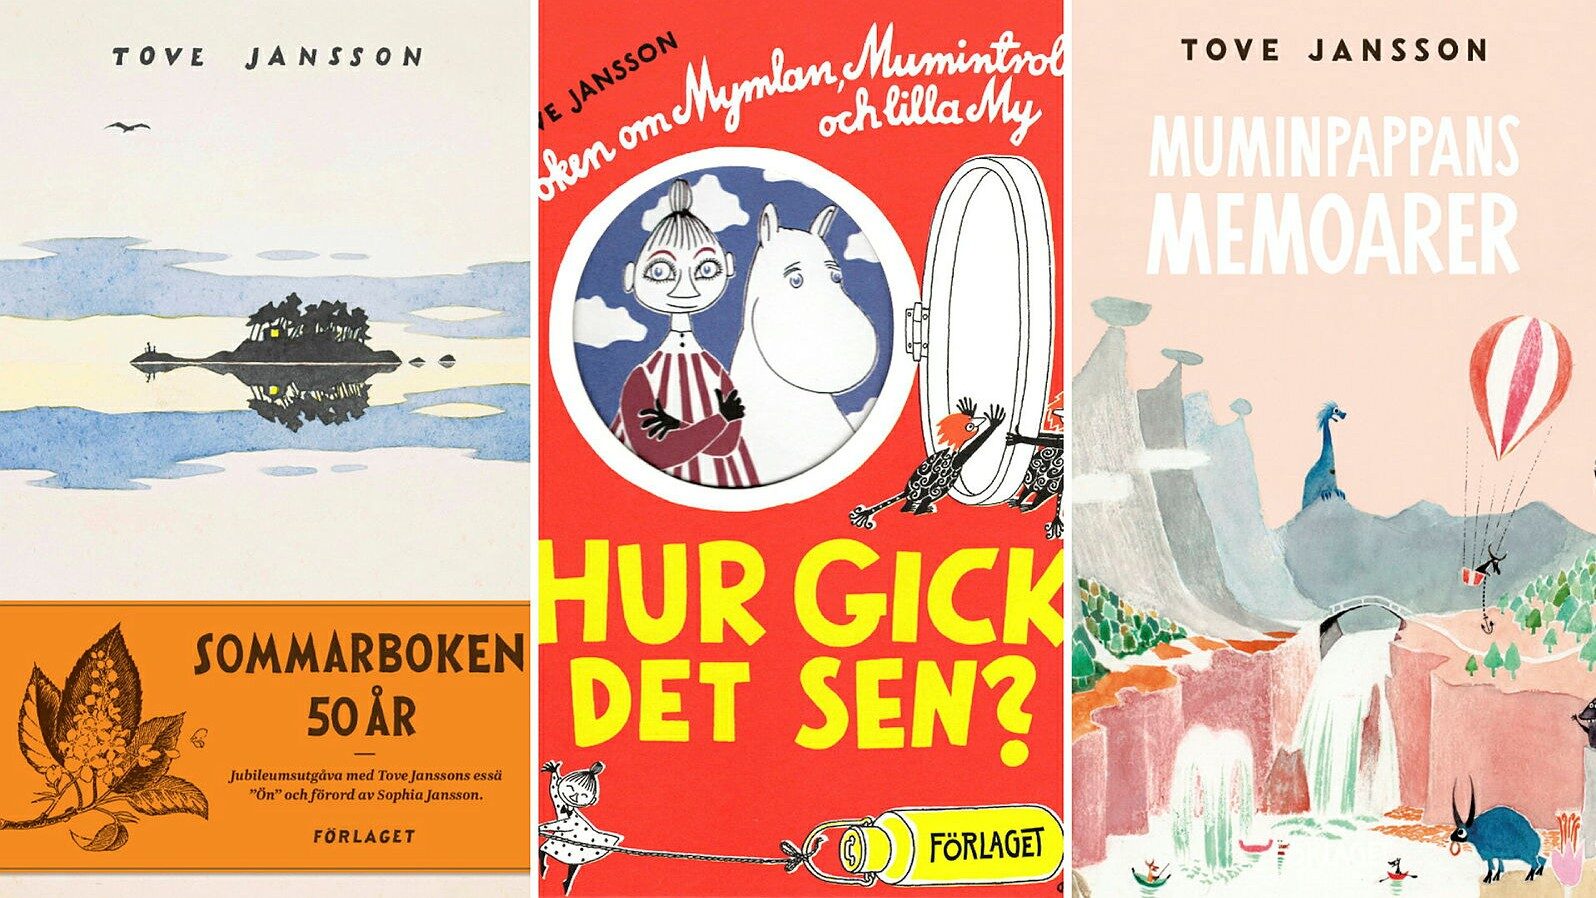 Lotta Olsson: Tre Tove Jansson böcker att fira - DN.SE - Dagens Nyheter